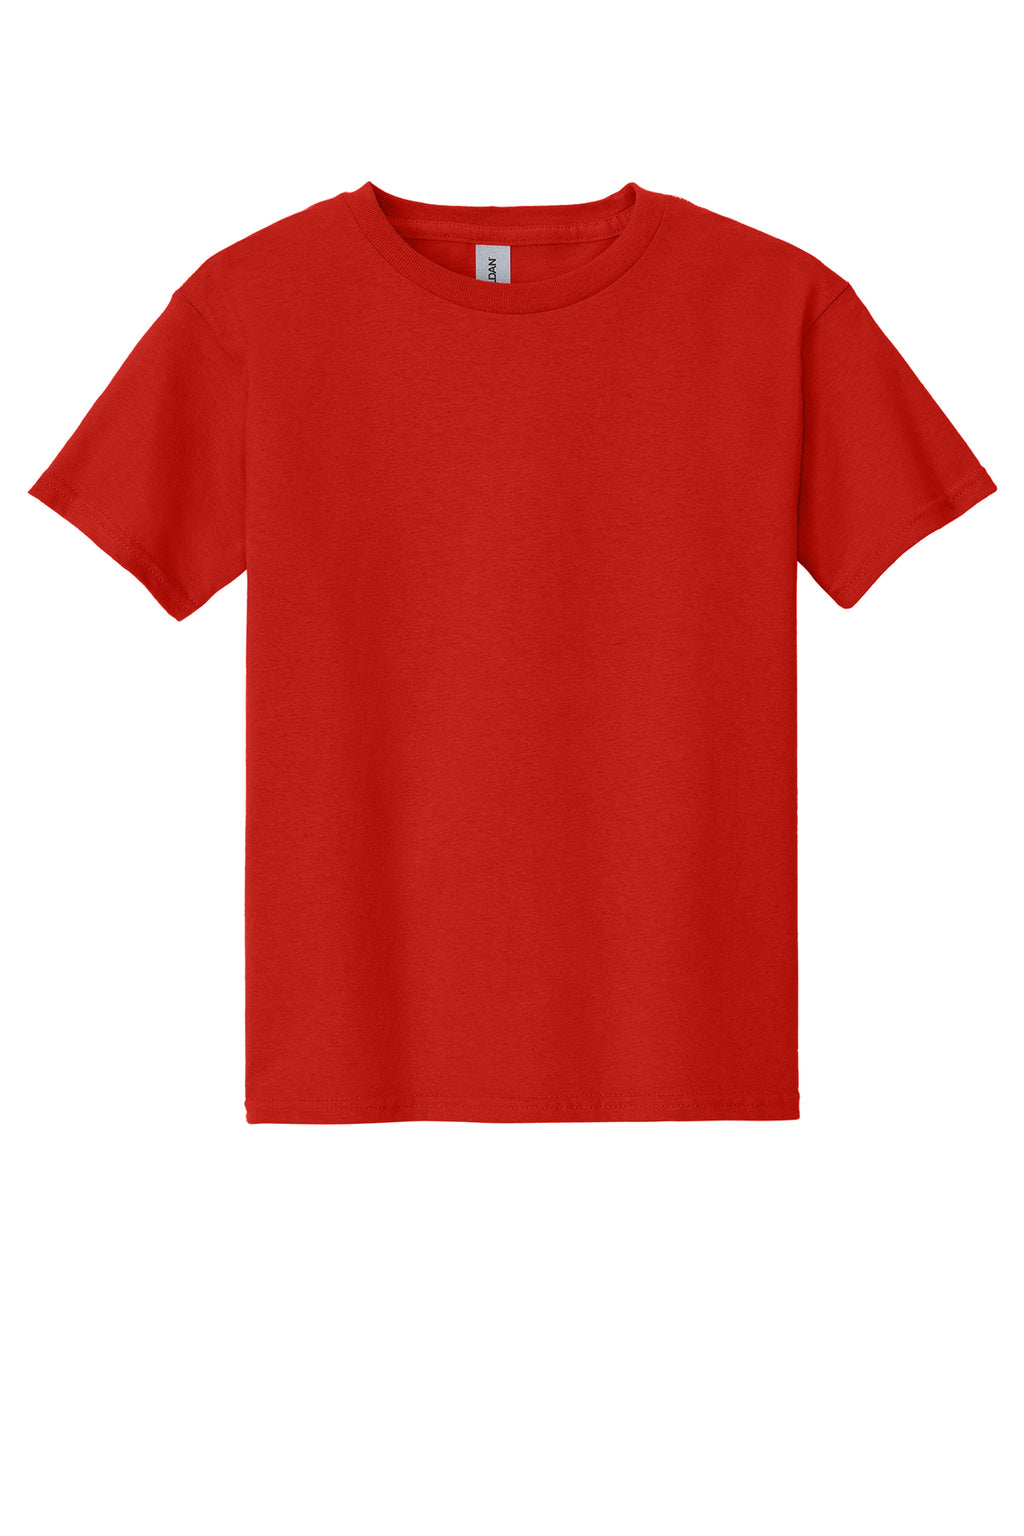 Gildan Youth S/S Shirts Red